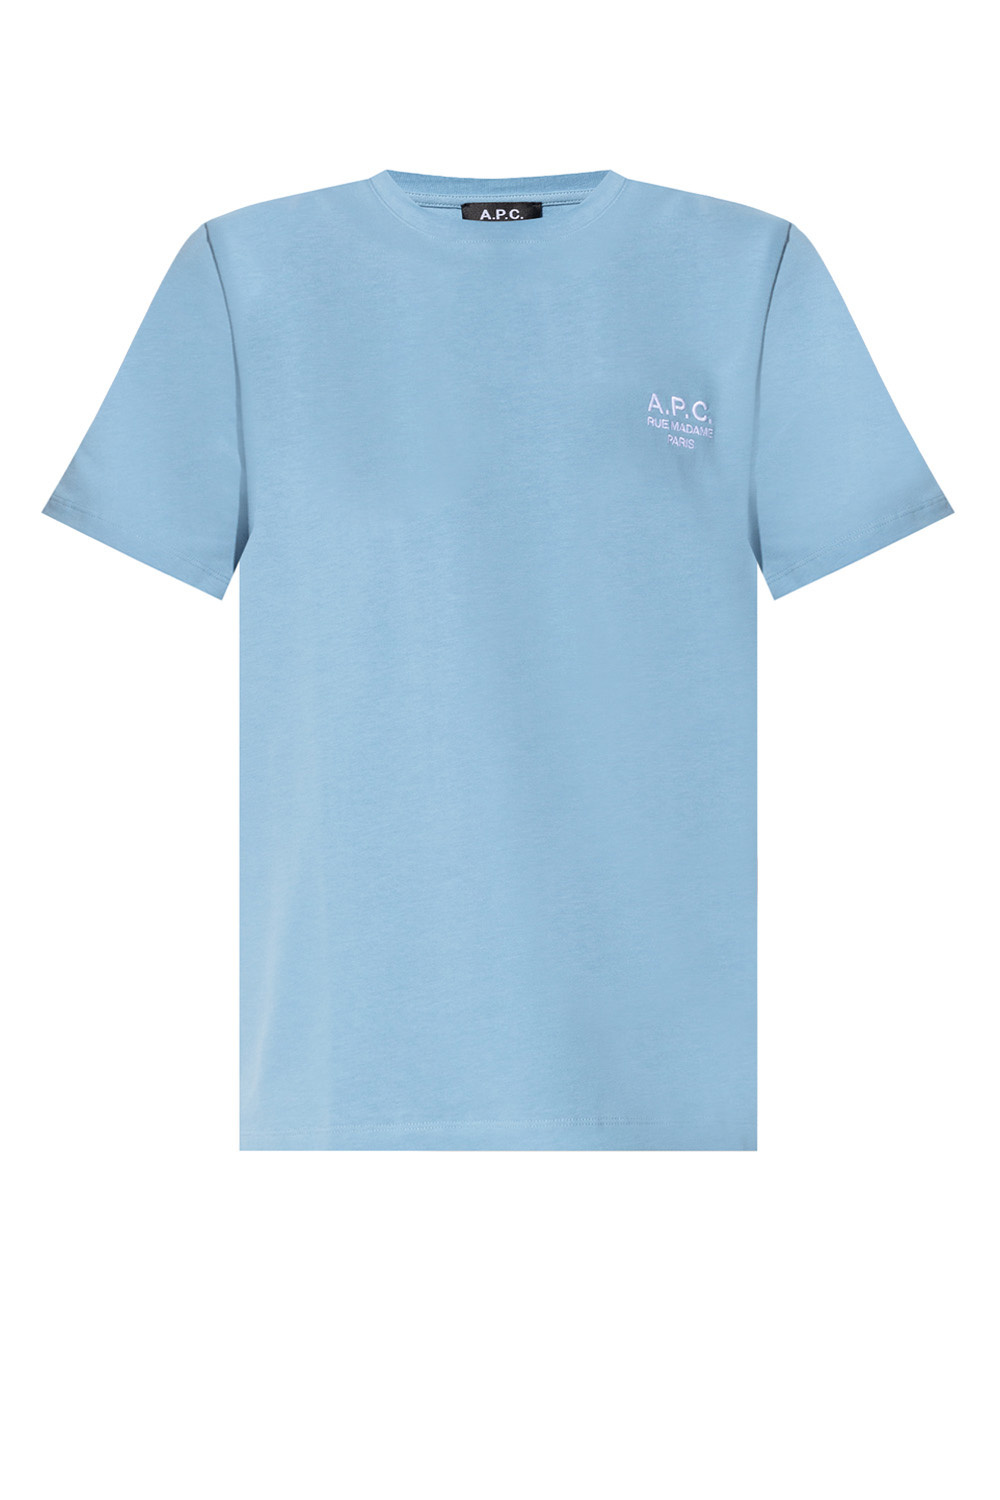 dragkedja halsen T shirt - IetpShops sweatshirt Stoke Brother Blood med - i - A.P.C. Logo embroidered GB Svart - Blue